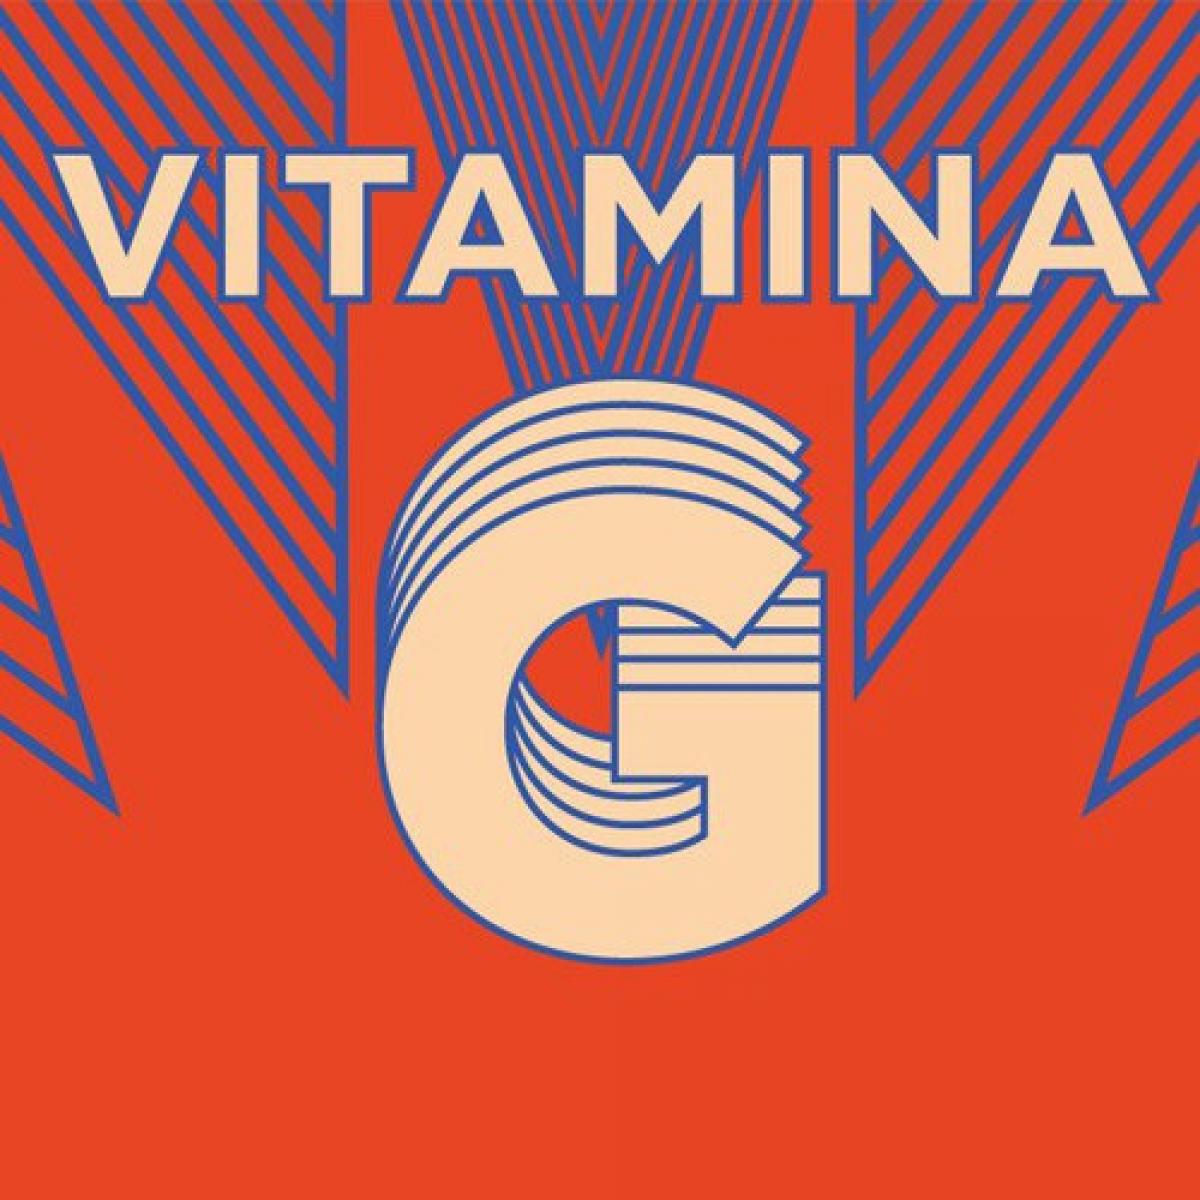 Vitamina G